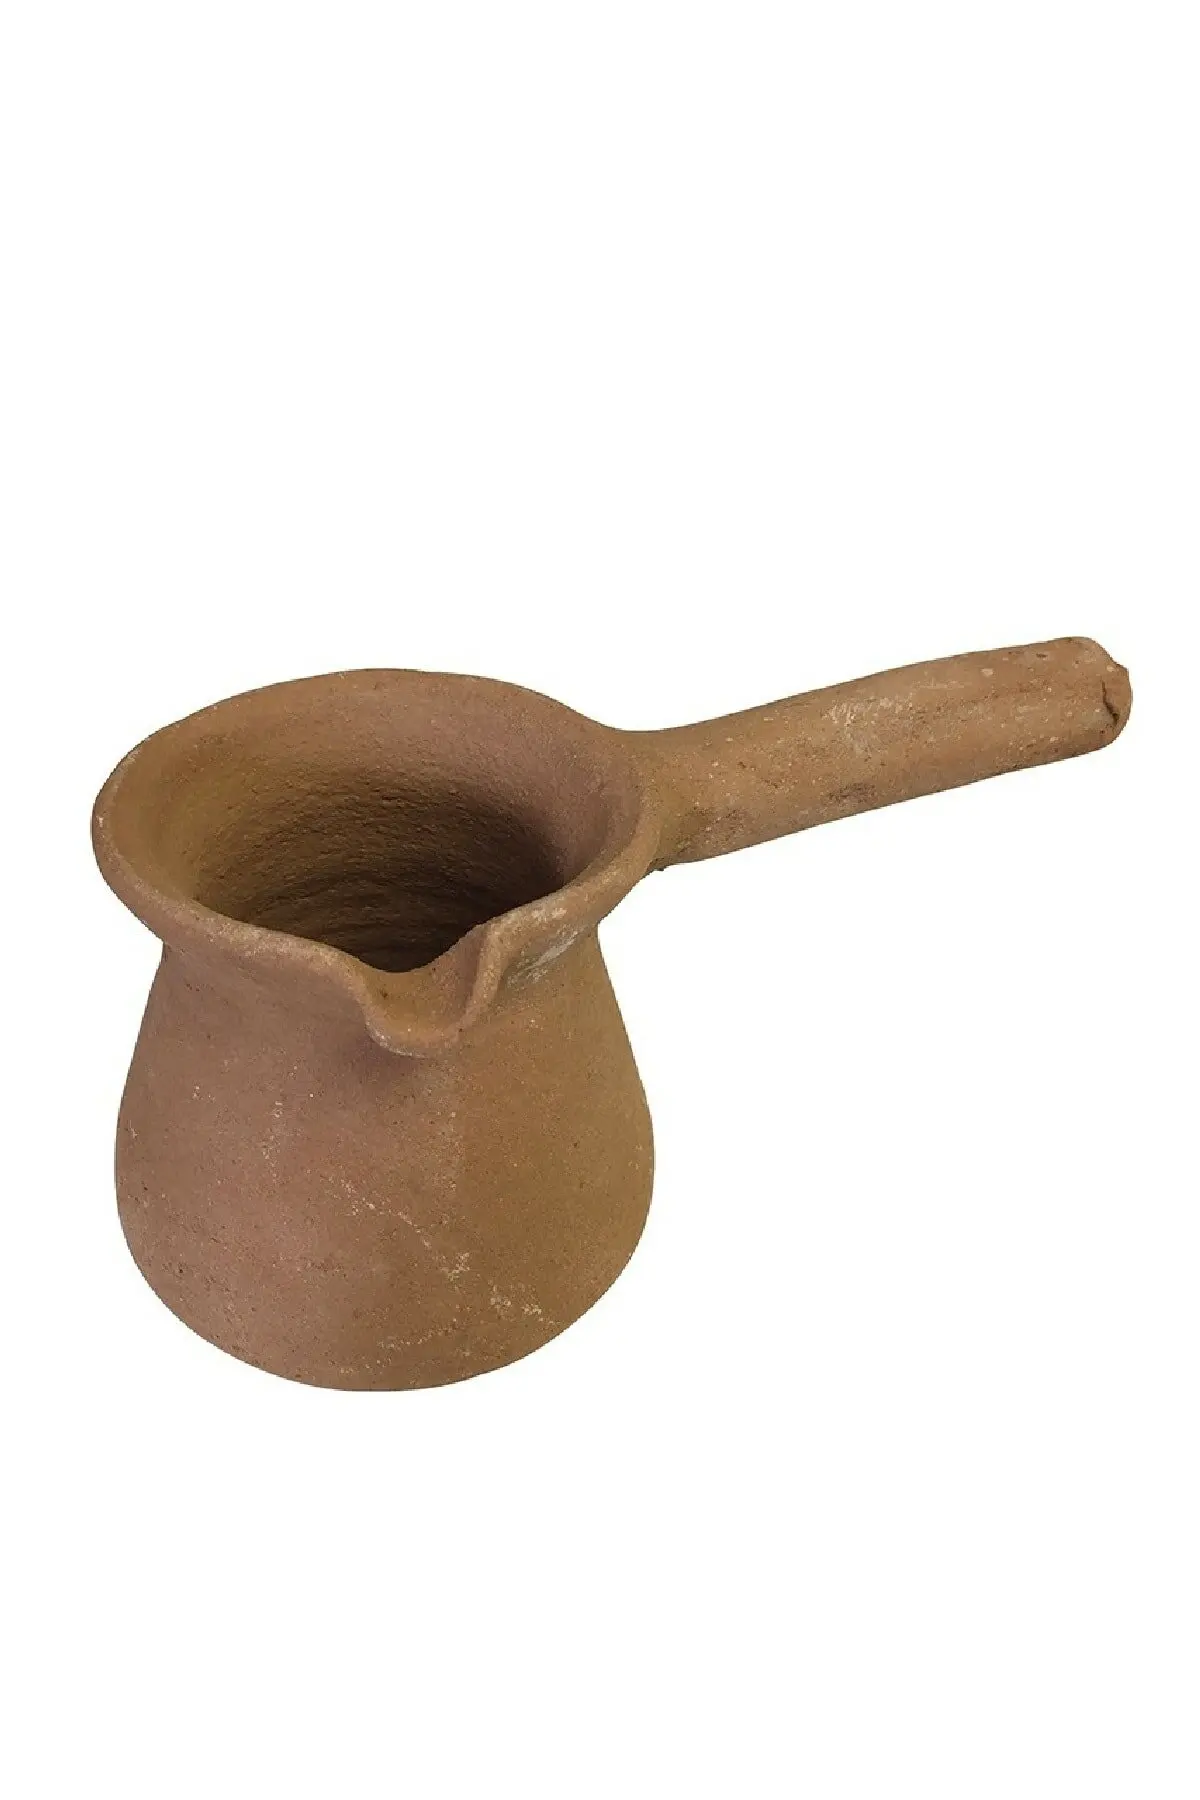 Earthen Turkish Handmade Soil Coffee Pot Traditional Moka Pot 4 Person 320ml Decorative Kitchen Accessories Coffe Maker